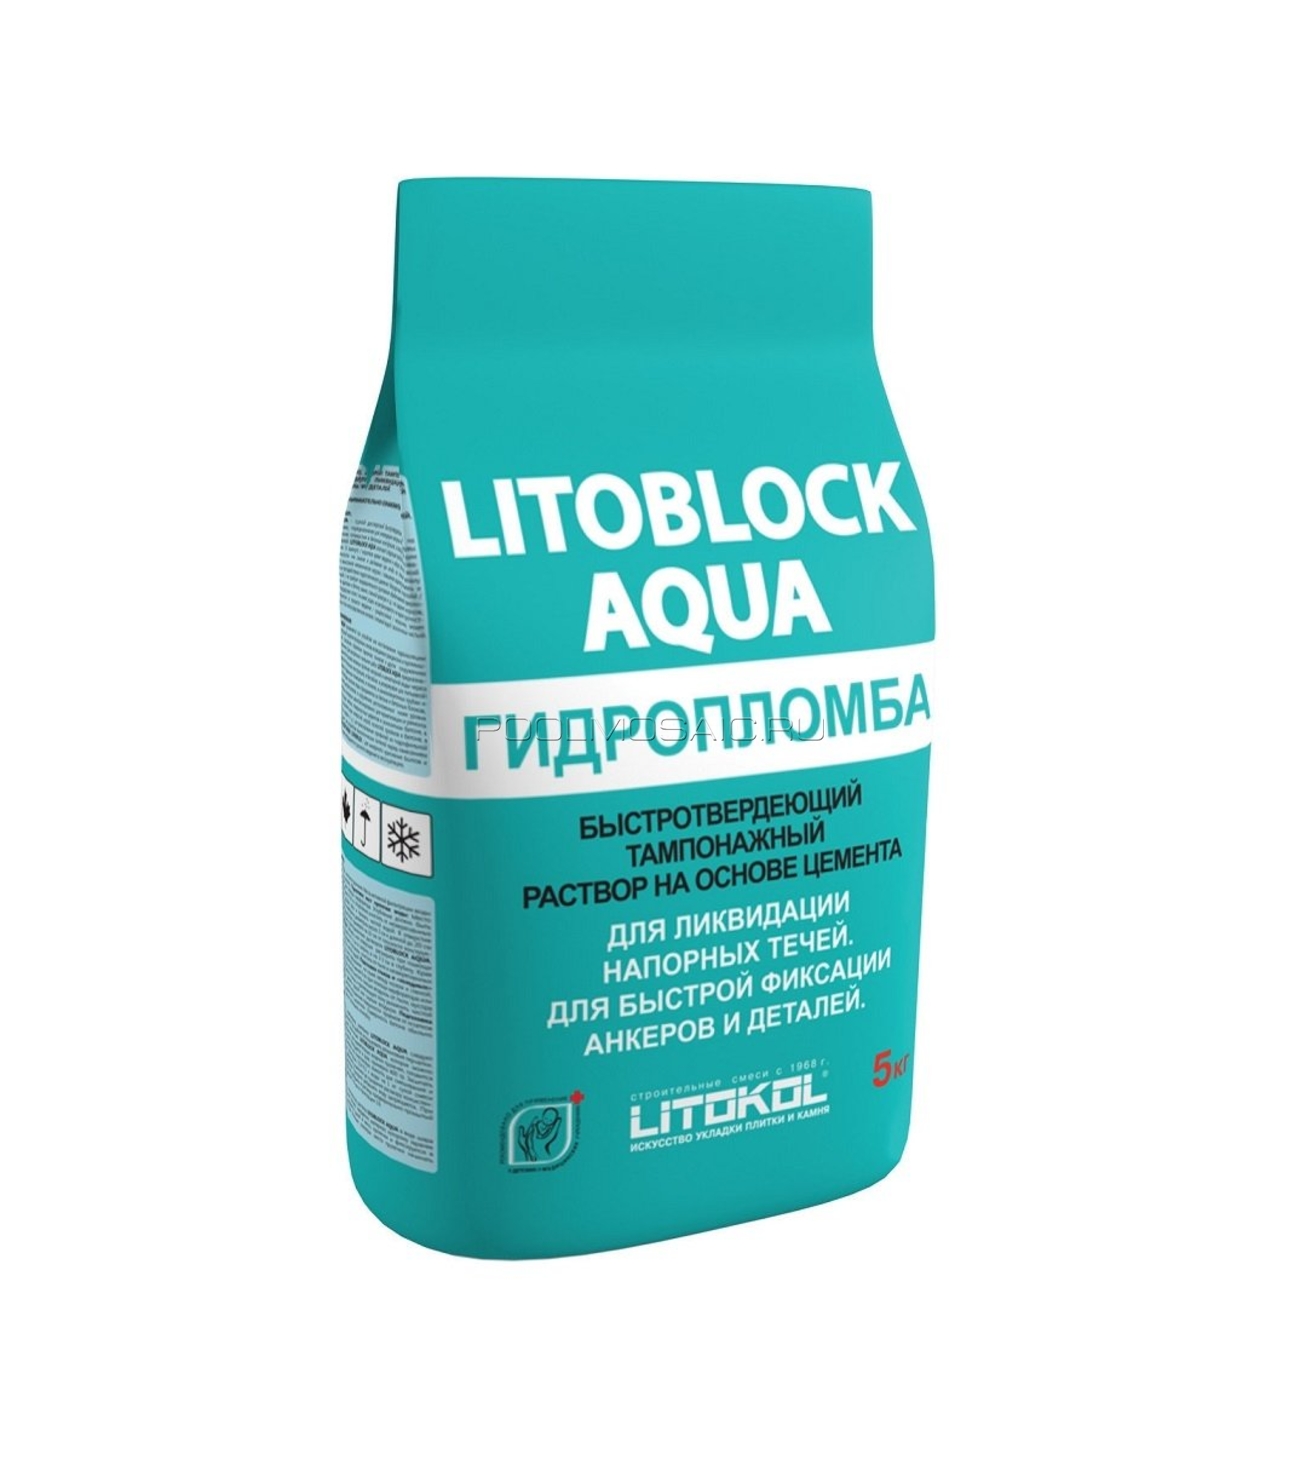 Гидроизоляция 5кг. LITOBLOCK Aqua гидропломба (5kg al.Bag). Гидропломба Литокол. Гидропломба Литокол для бетона. Гидропломба Боларс 0,6кг.